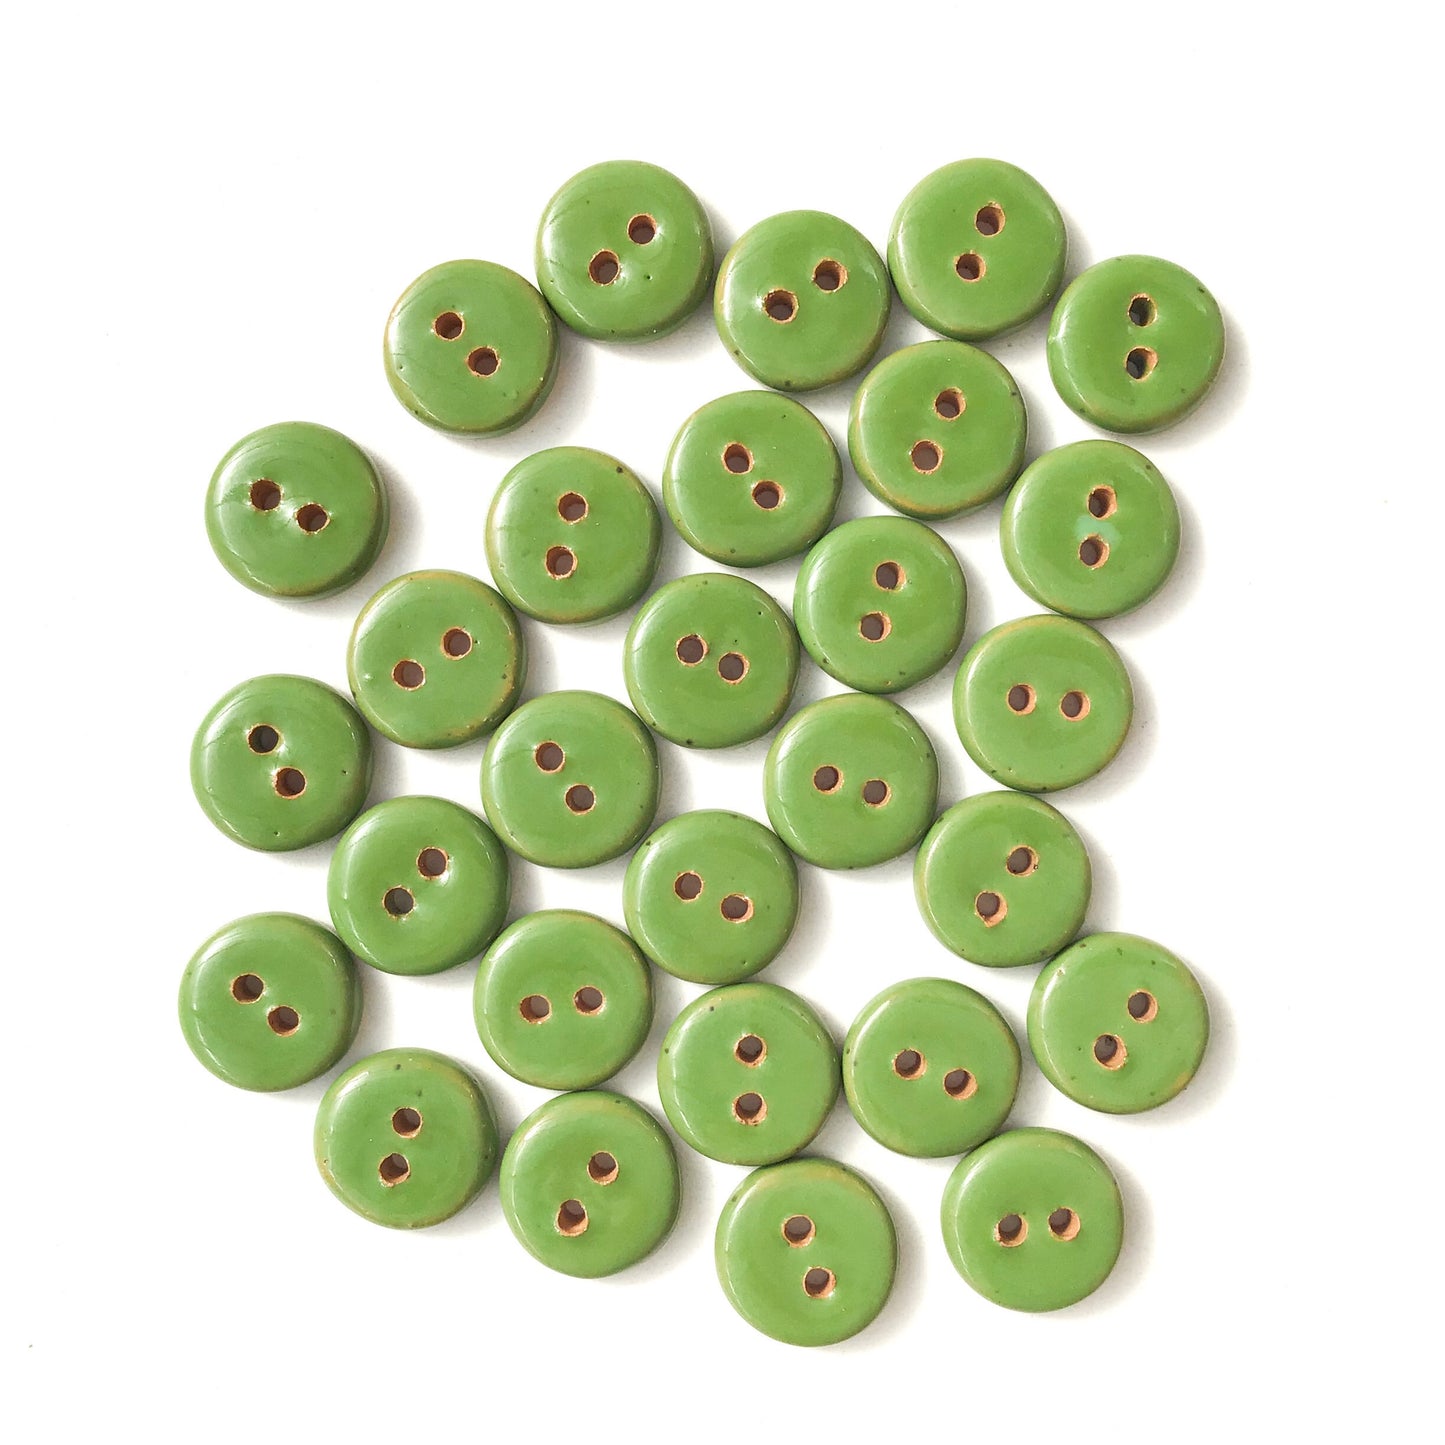 Shamrock Green Ceramic Buttons - Green Pottery Buttons - 9/16" (ws-190)